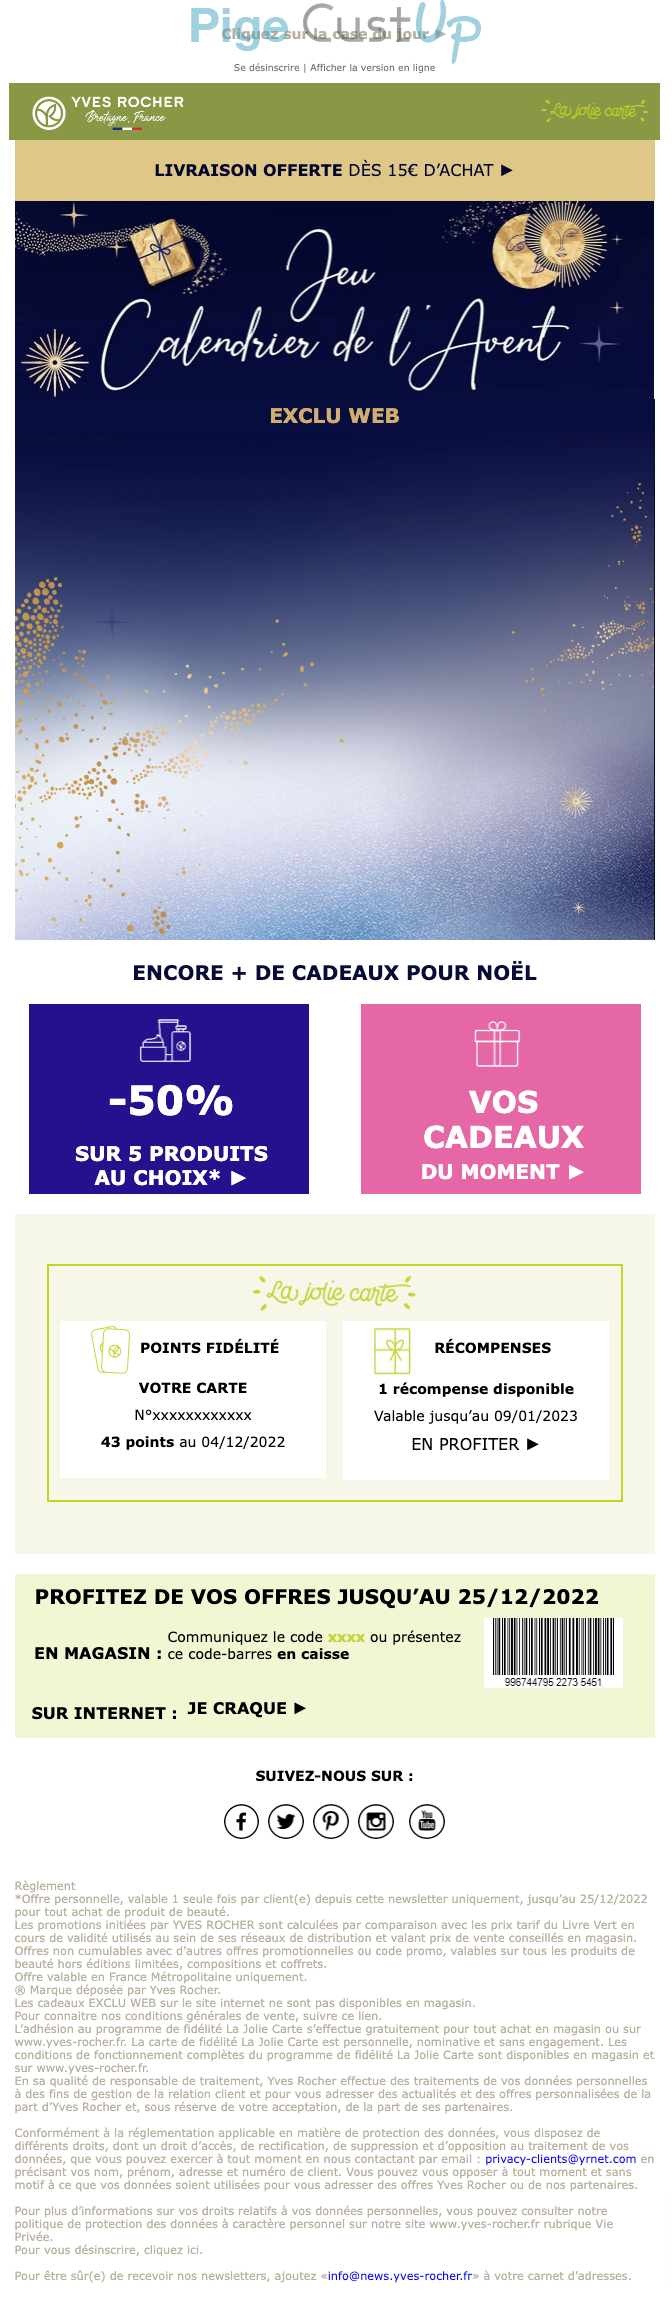 Exemple de Type de media  e-mailing - Yves Rocher - Marketing Acquisition - Jeu promo